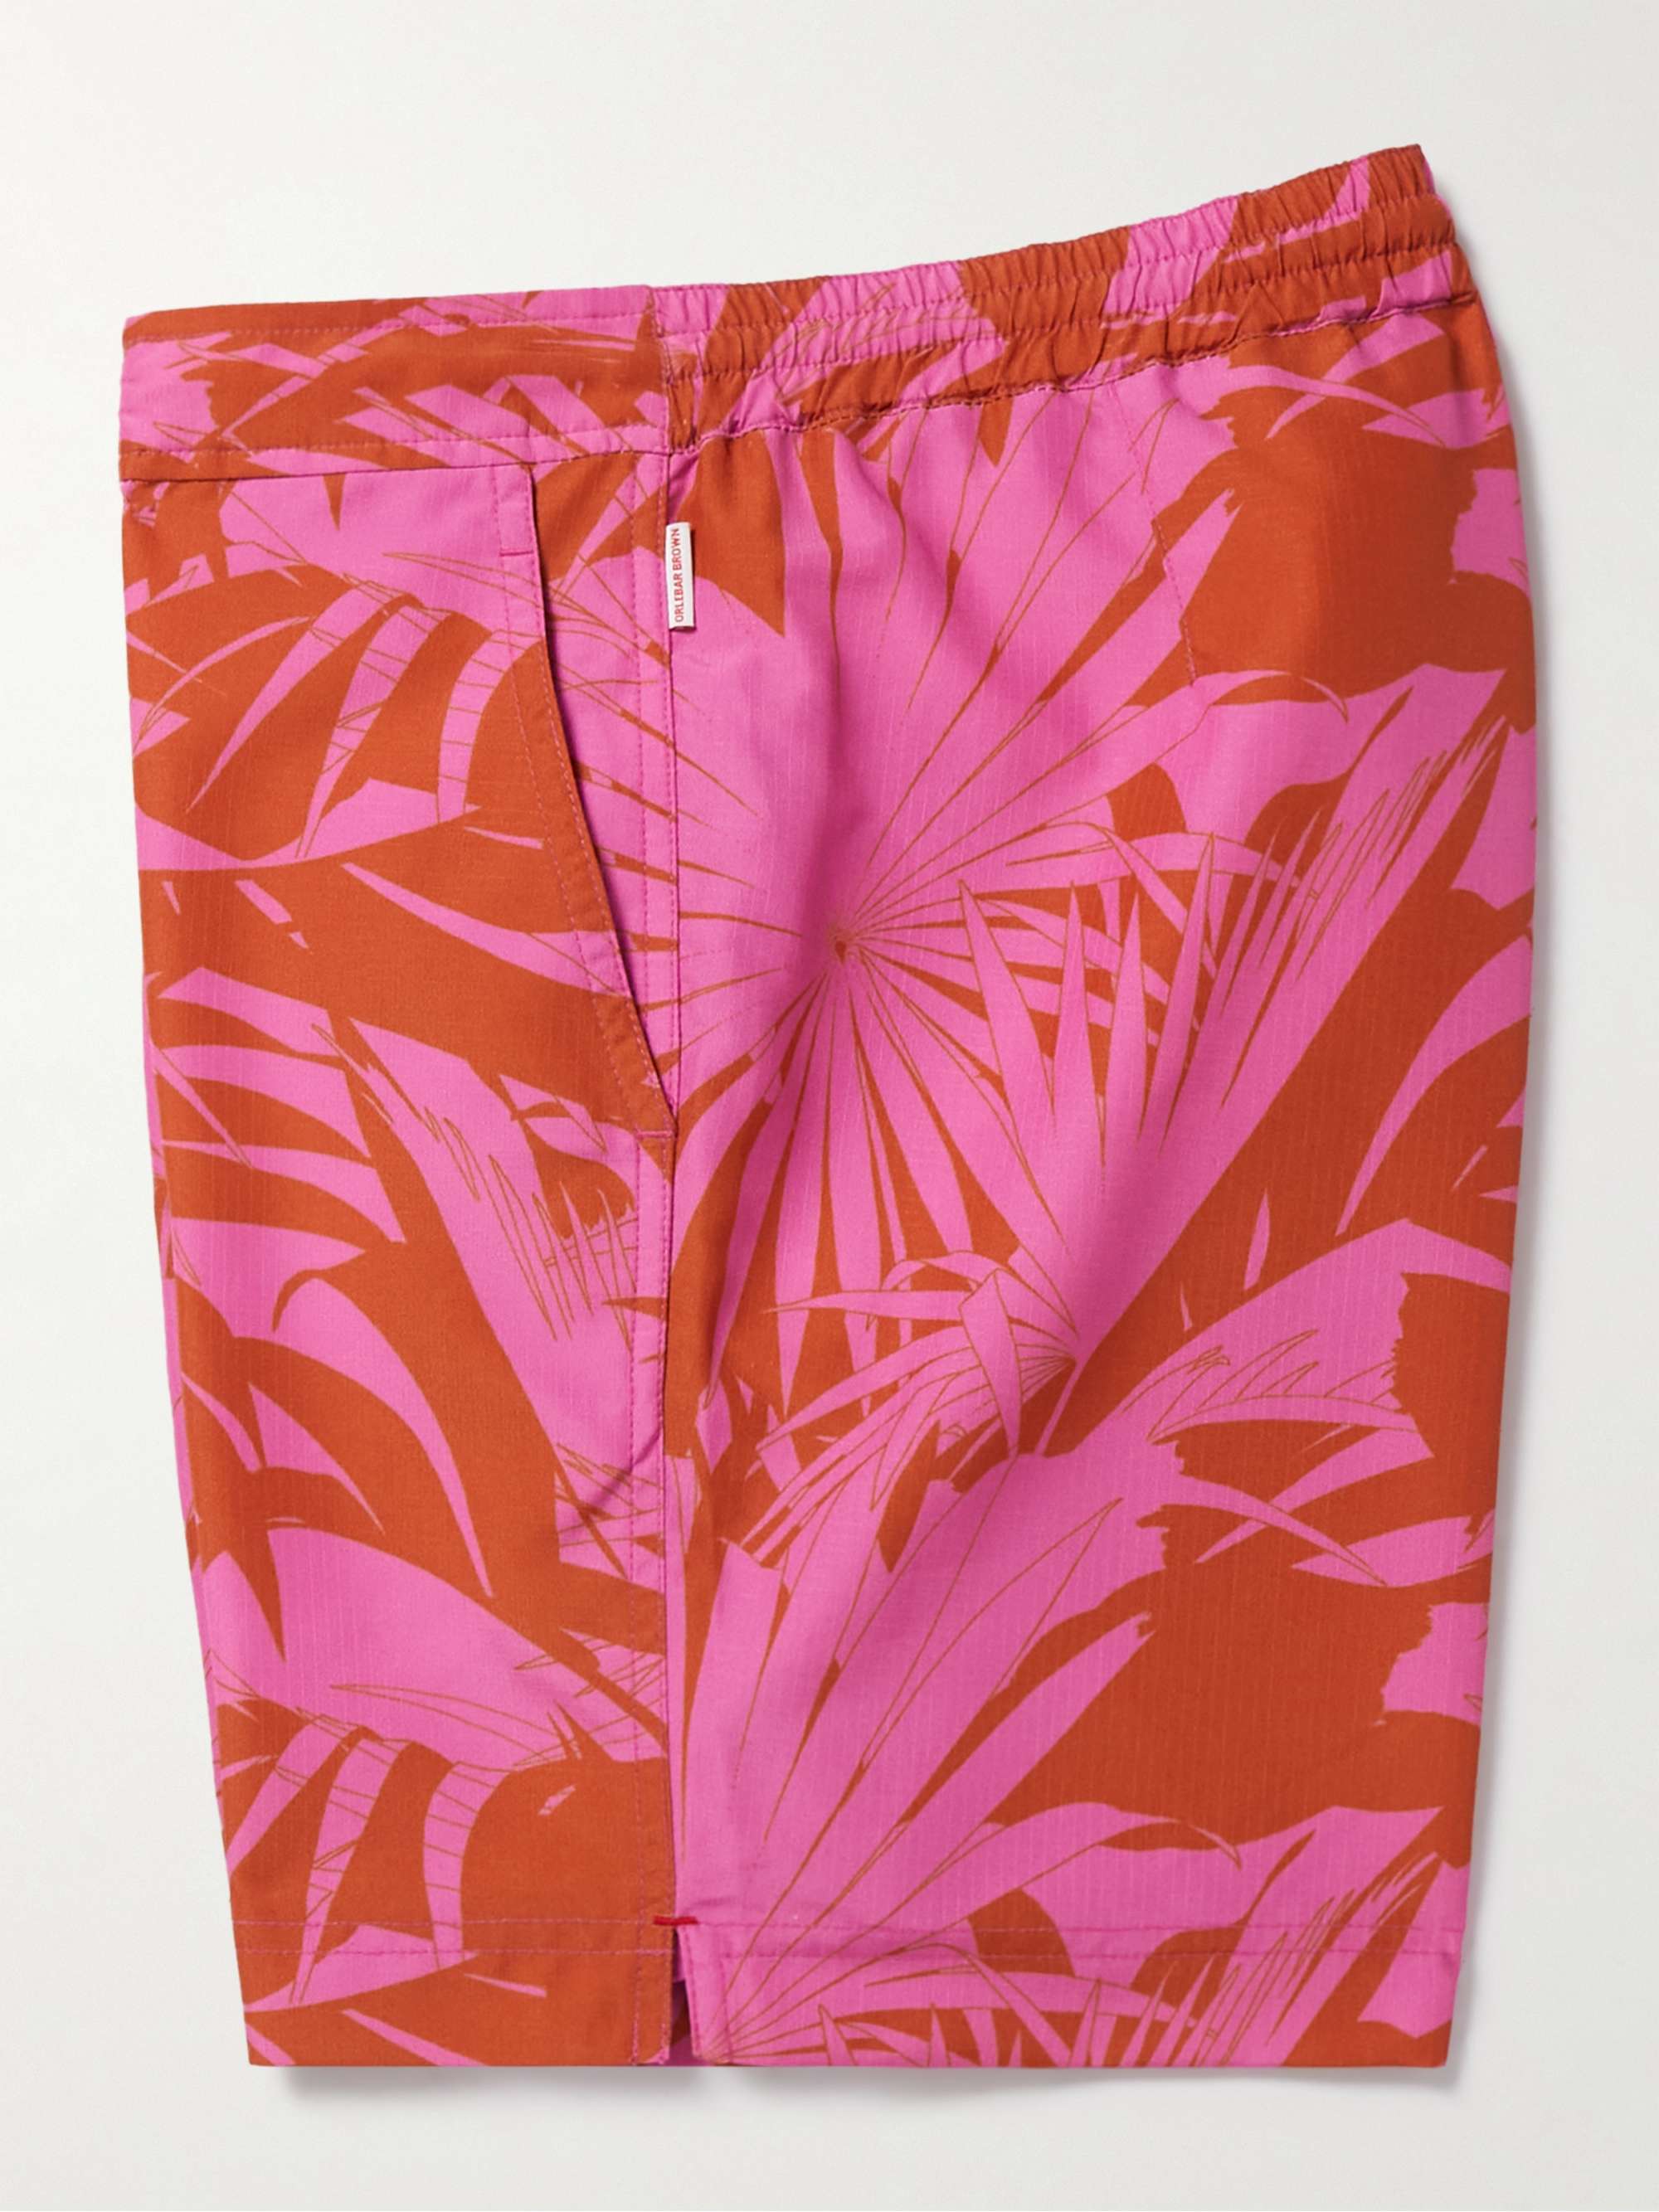 ORLEBAR BROWN Standard Straight-Leg Mid-Length Printed Swim Shorts